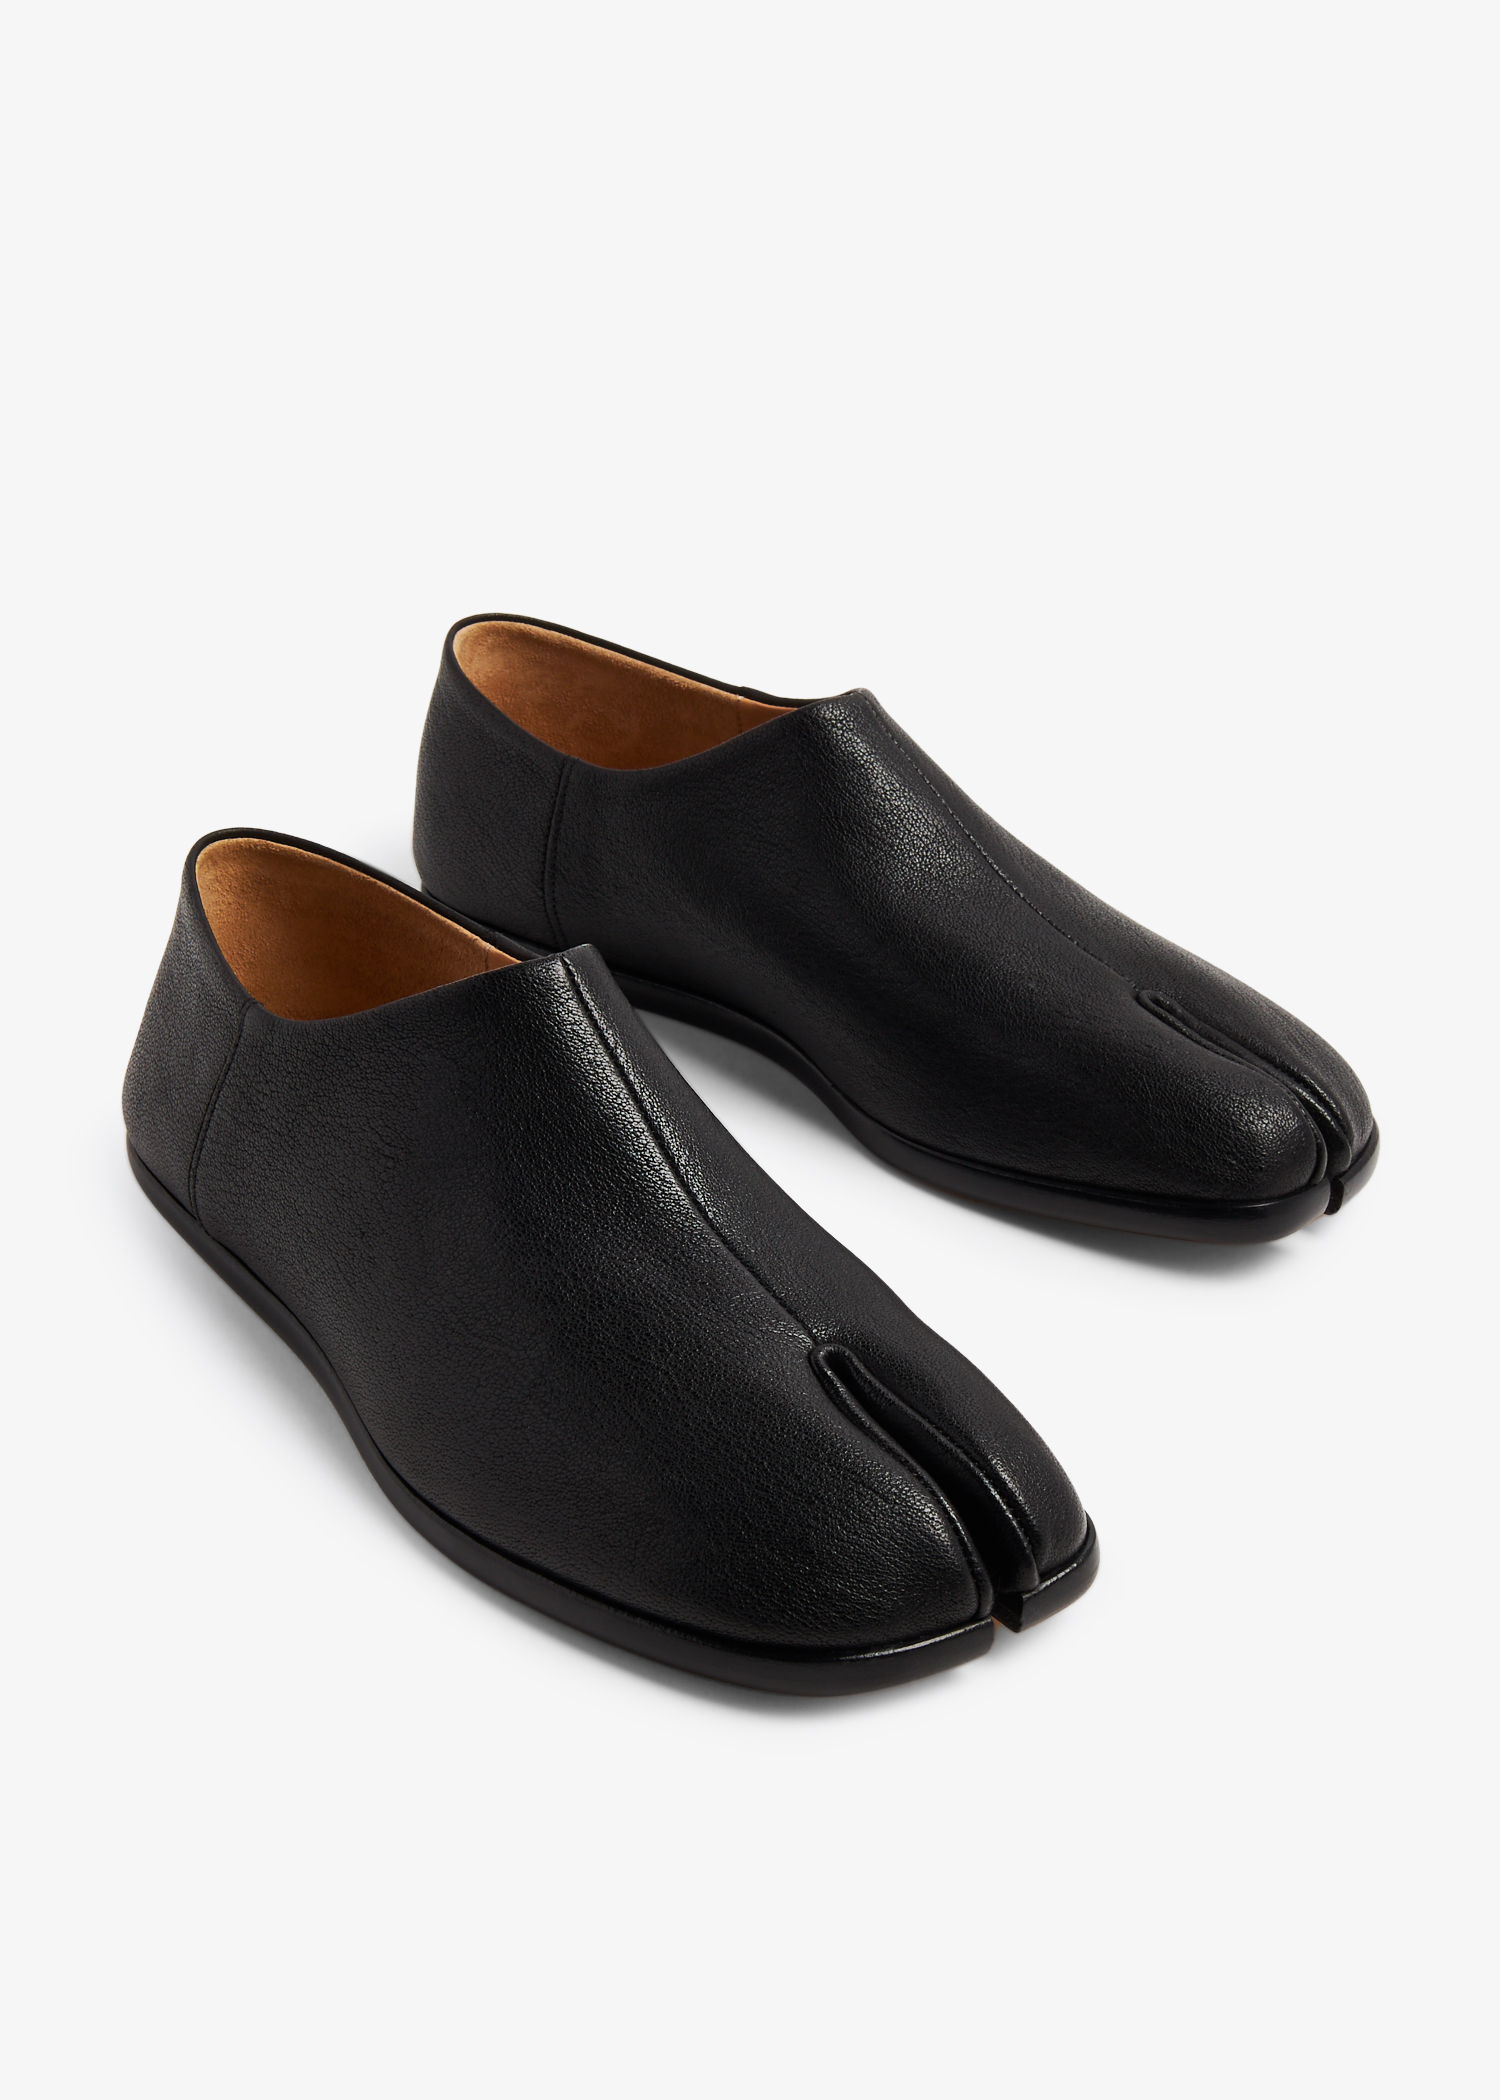 Maison Margiela Tabi babouche shoes for Men - Black in UAE | Level 